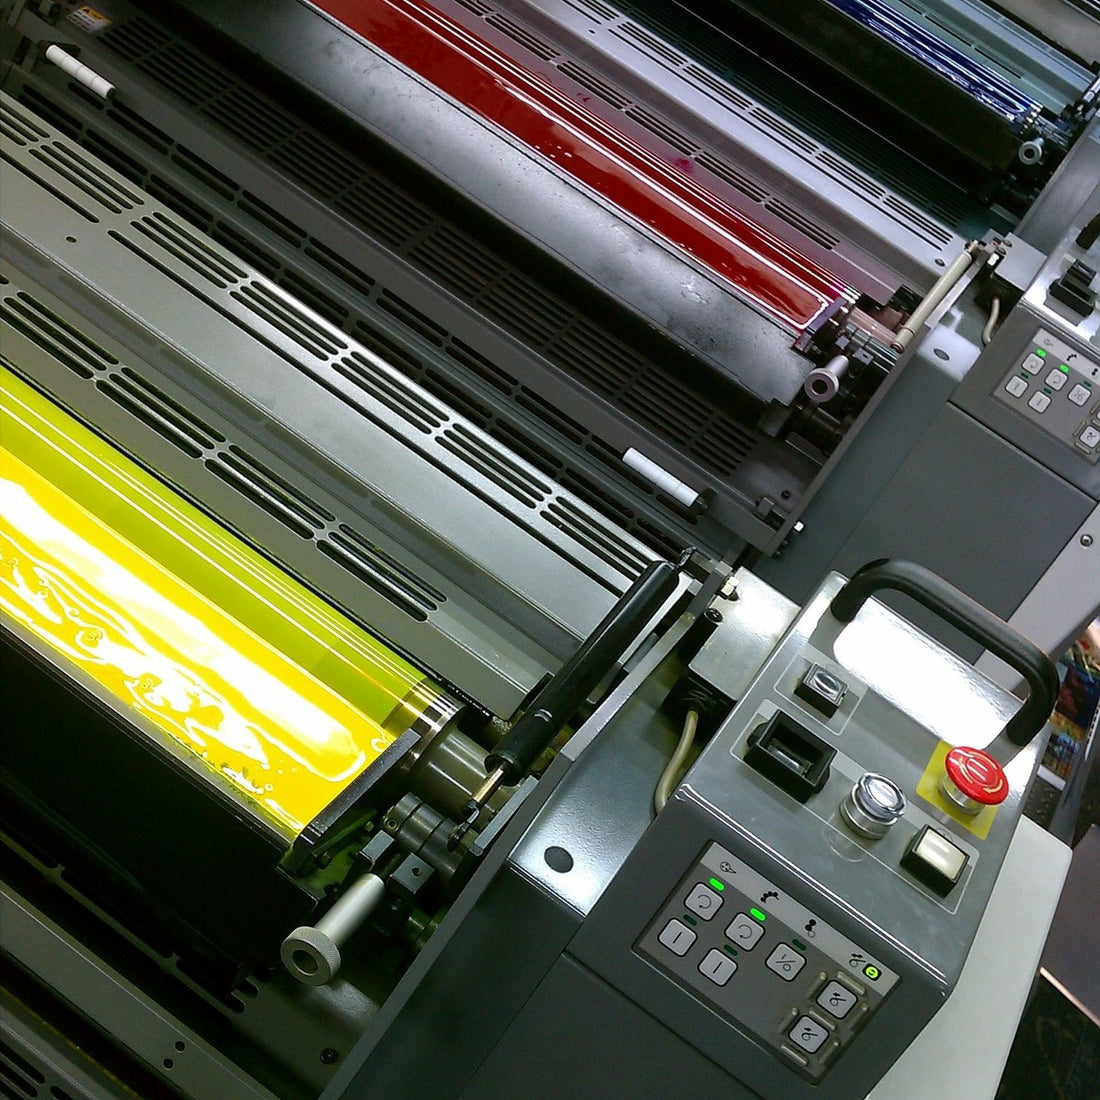 MD Print Shop - Quality Business Printing